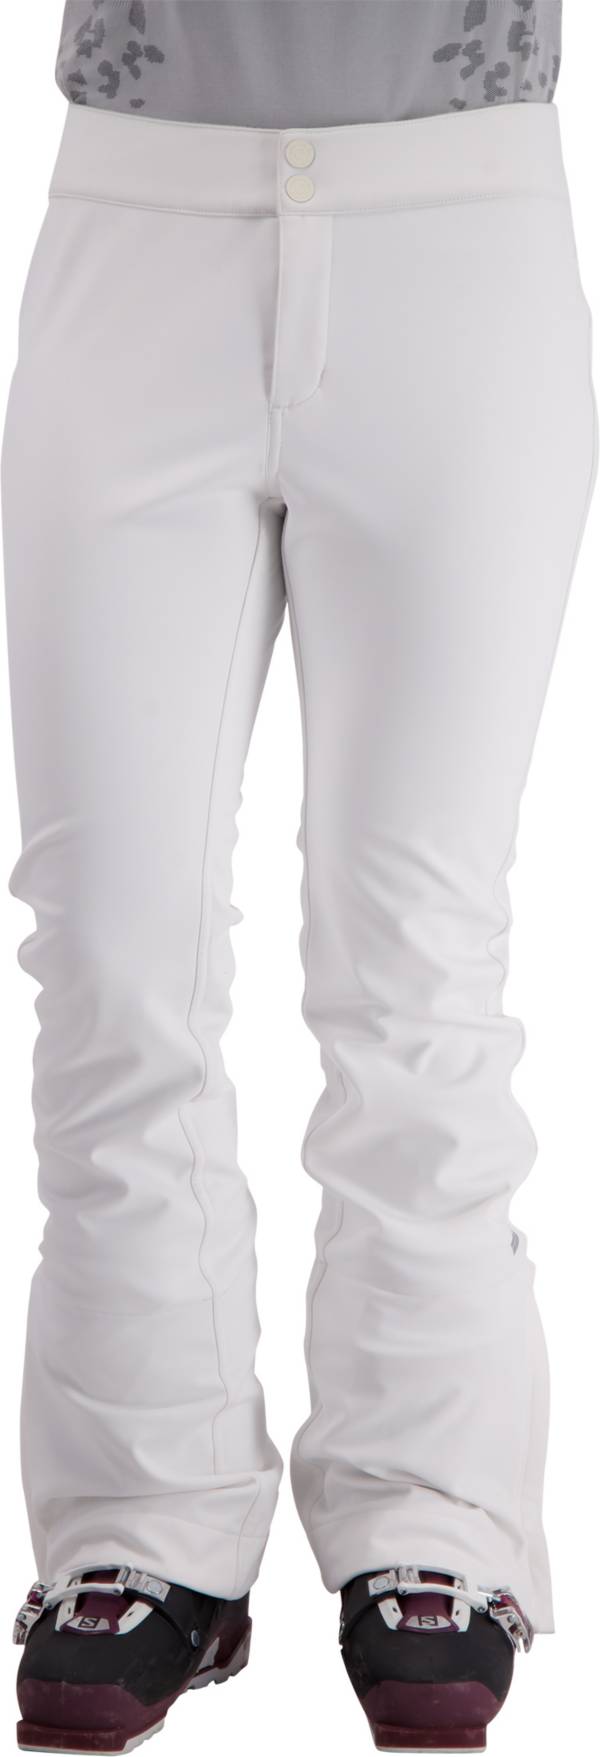 Obermeyer Women's The Bond Ski Pants product image